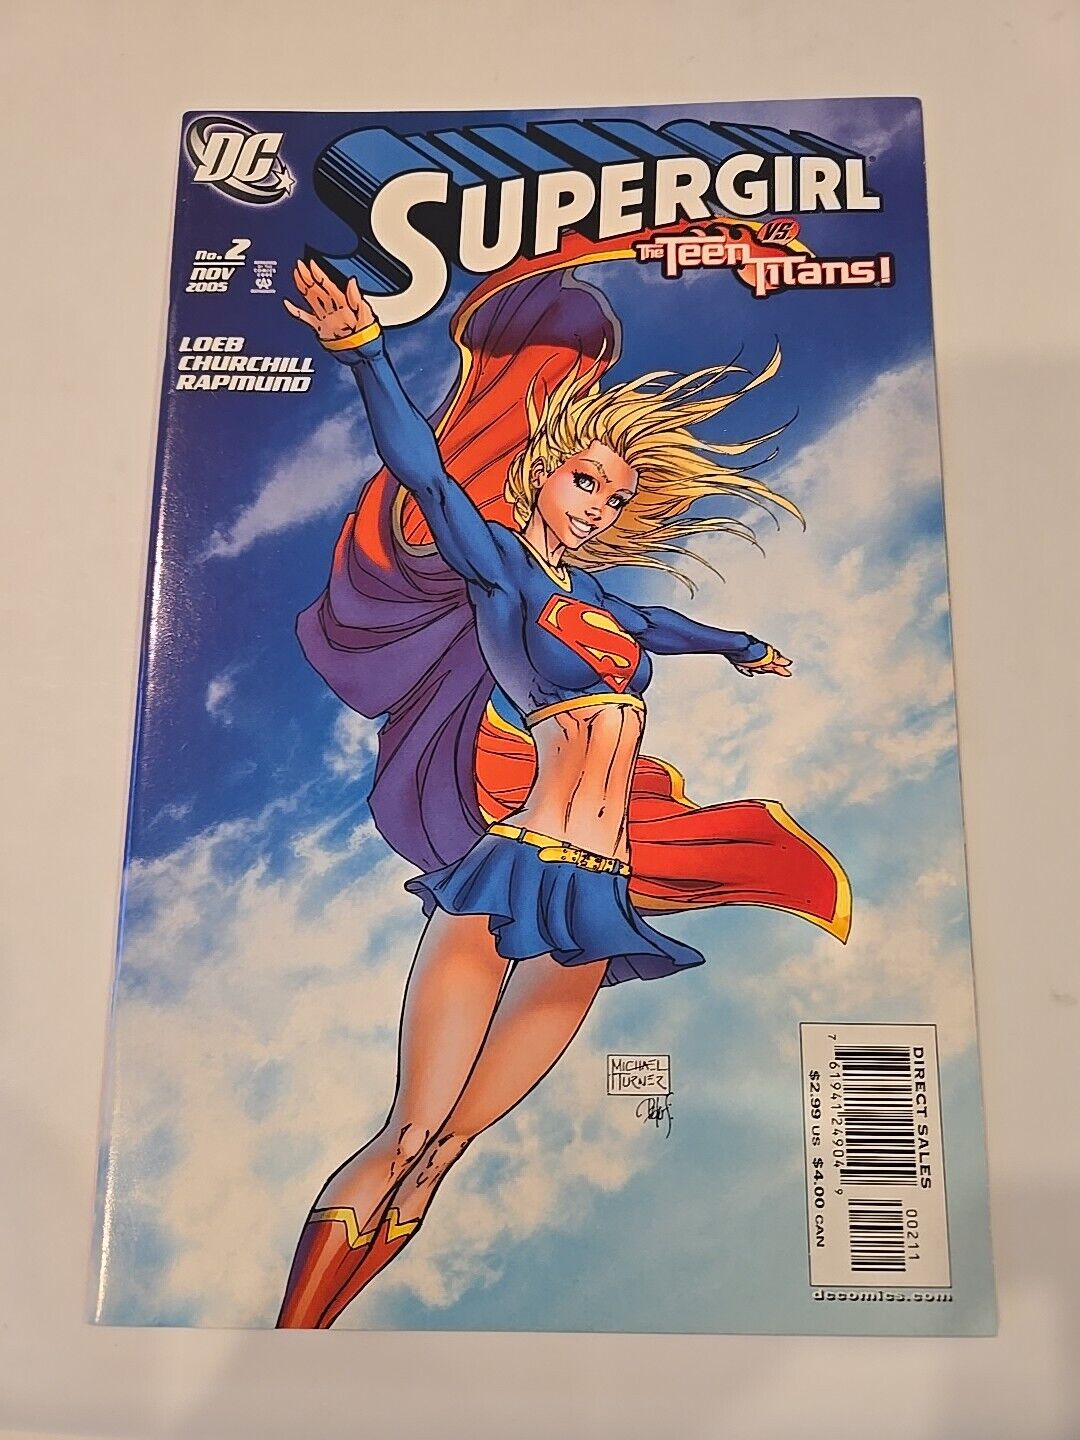 SUPERGIRL #2 DC COMICS 2005 MICHAEL TURNER VARIANT COVER TEEN TITANS JEPH LOEB